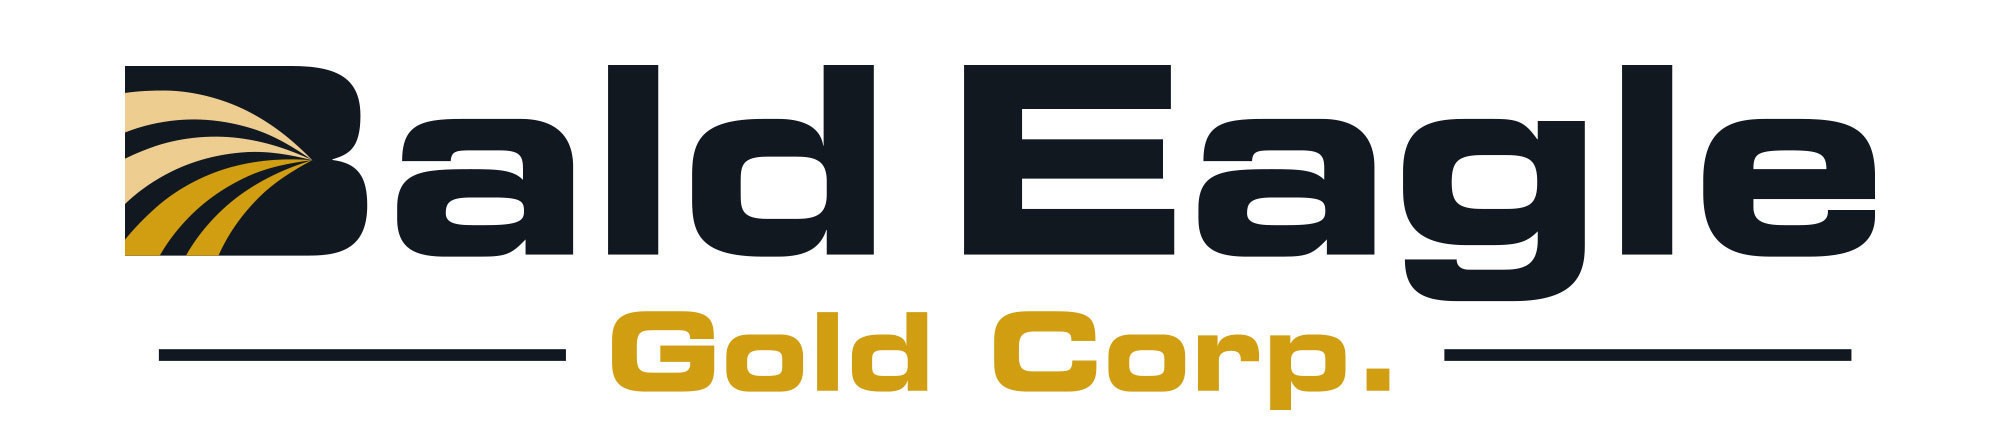 Bald Eagle Gold Announces Listing on the OTCQB Venture Market